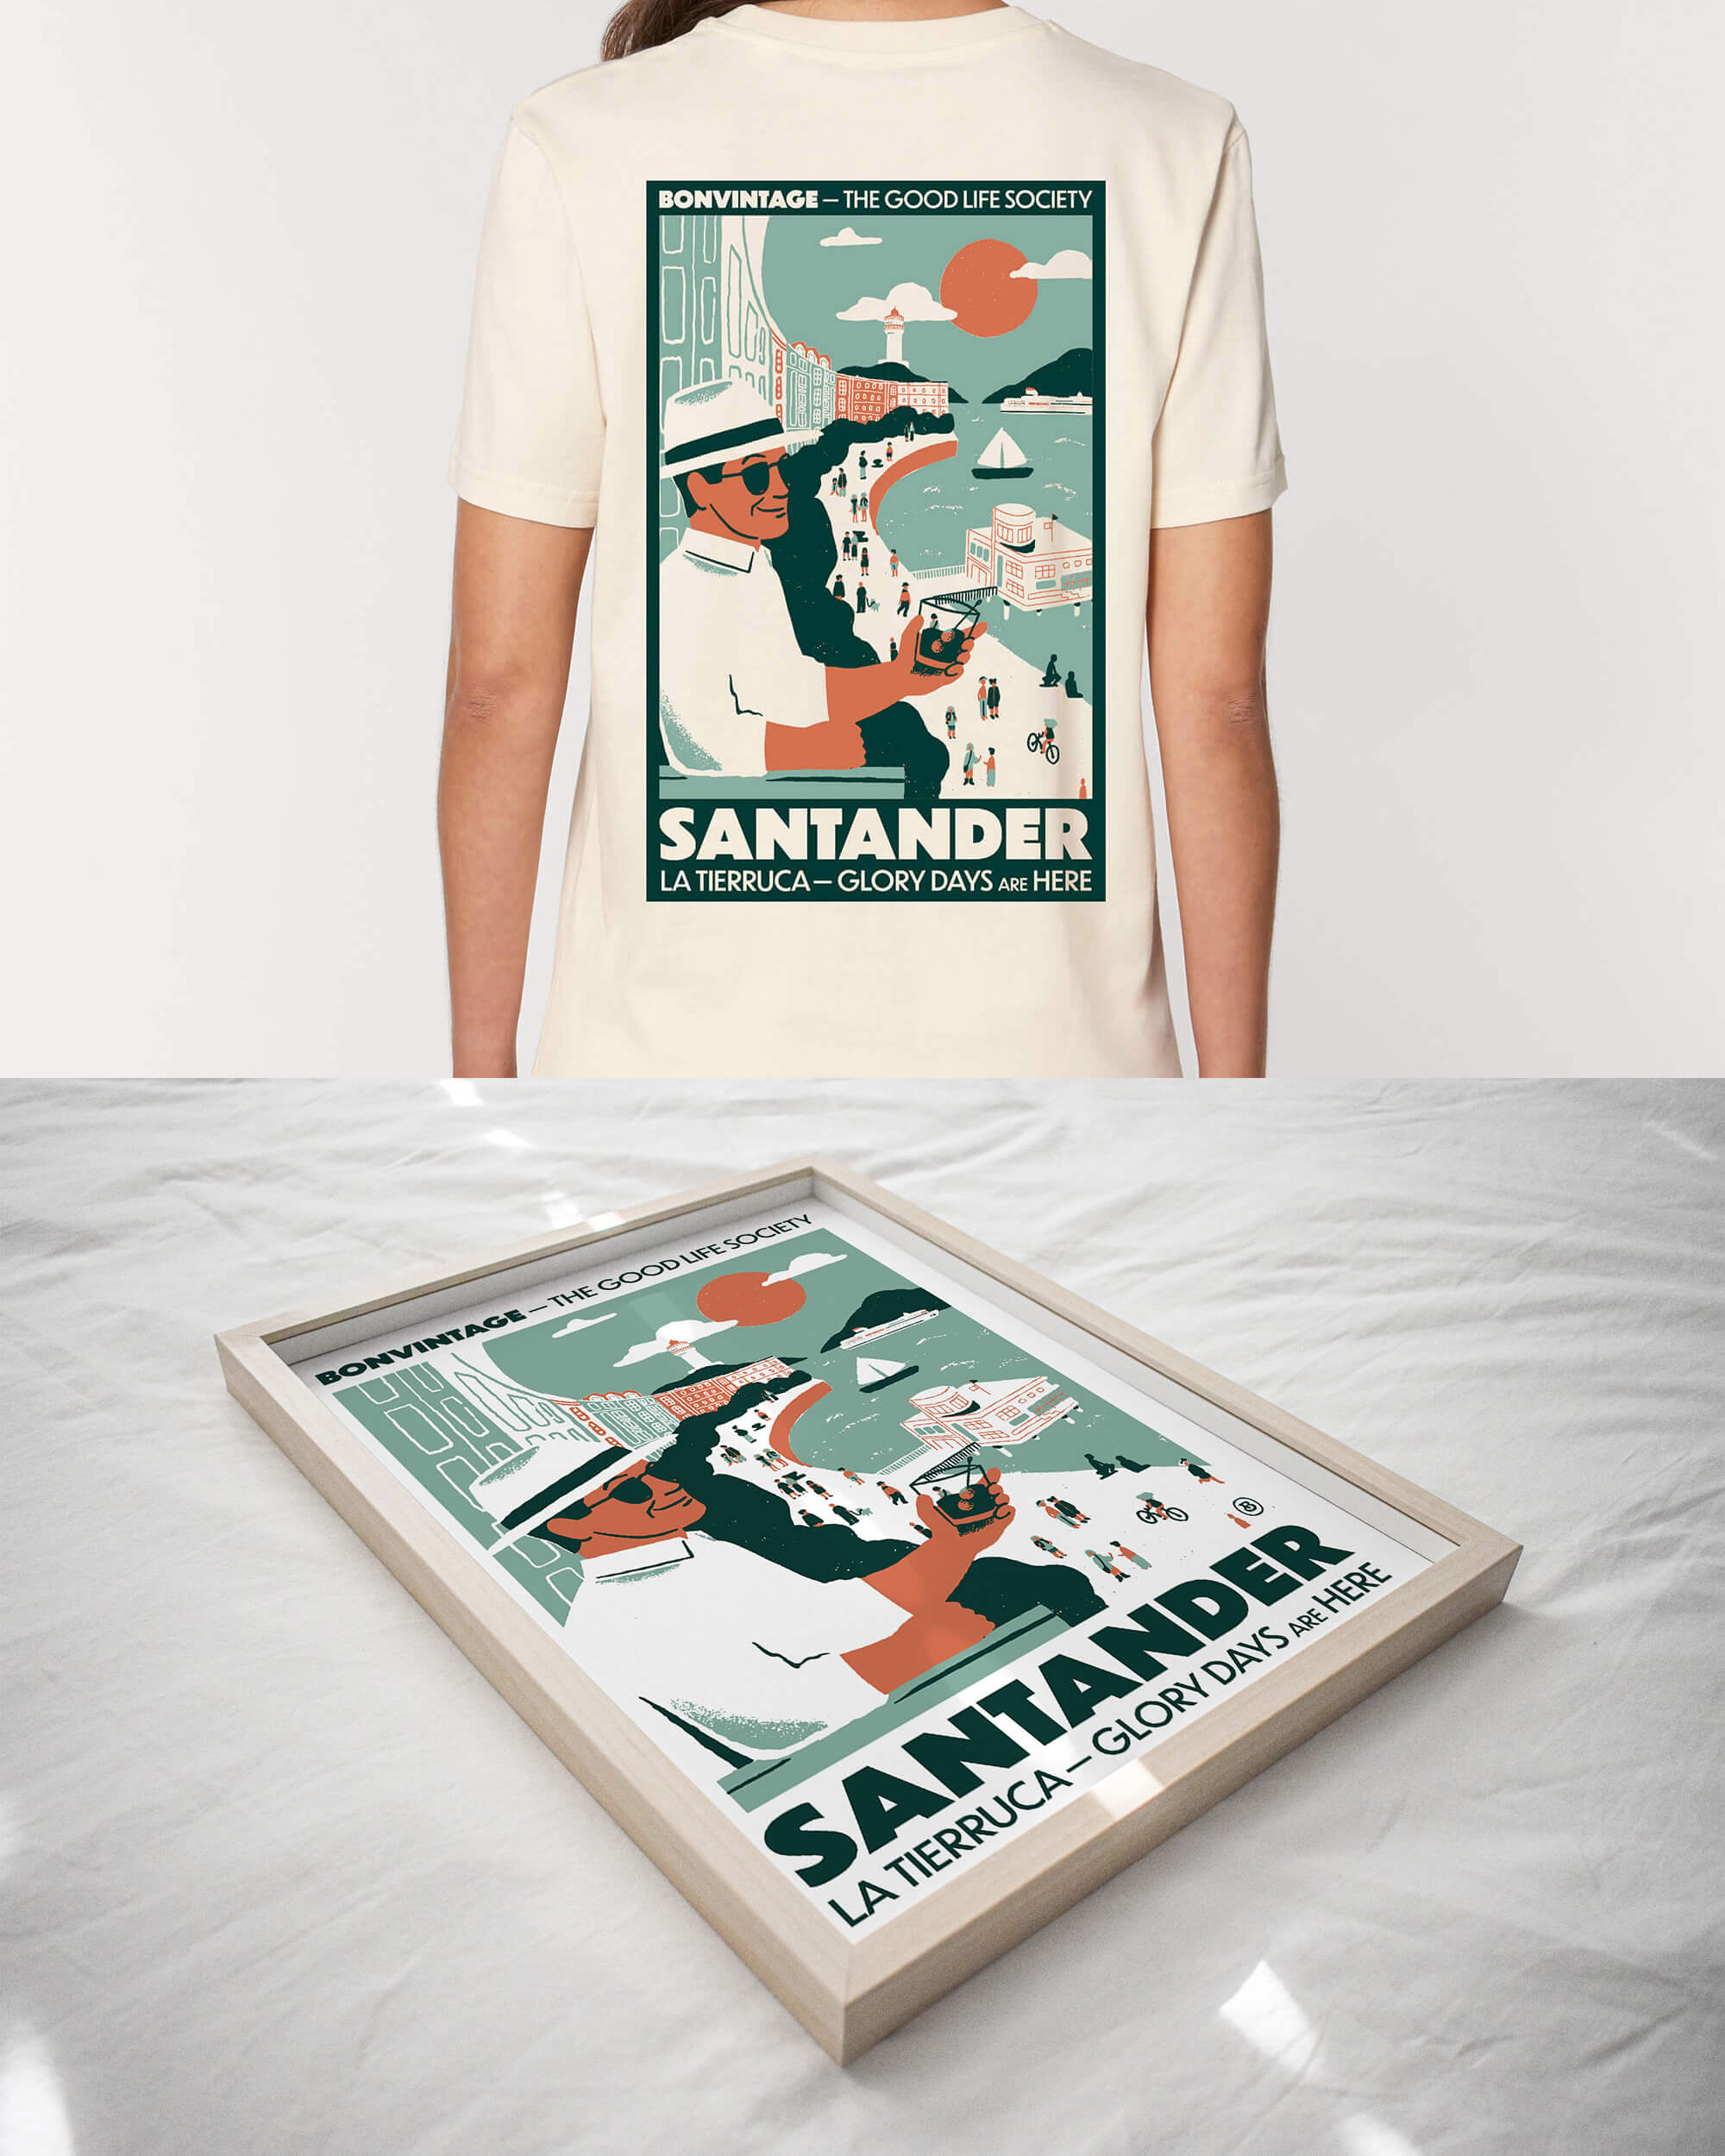 Camiseta y lámina Santander BonVintage